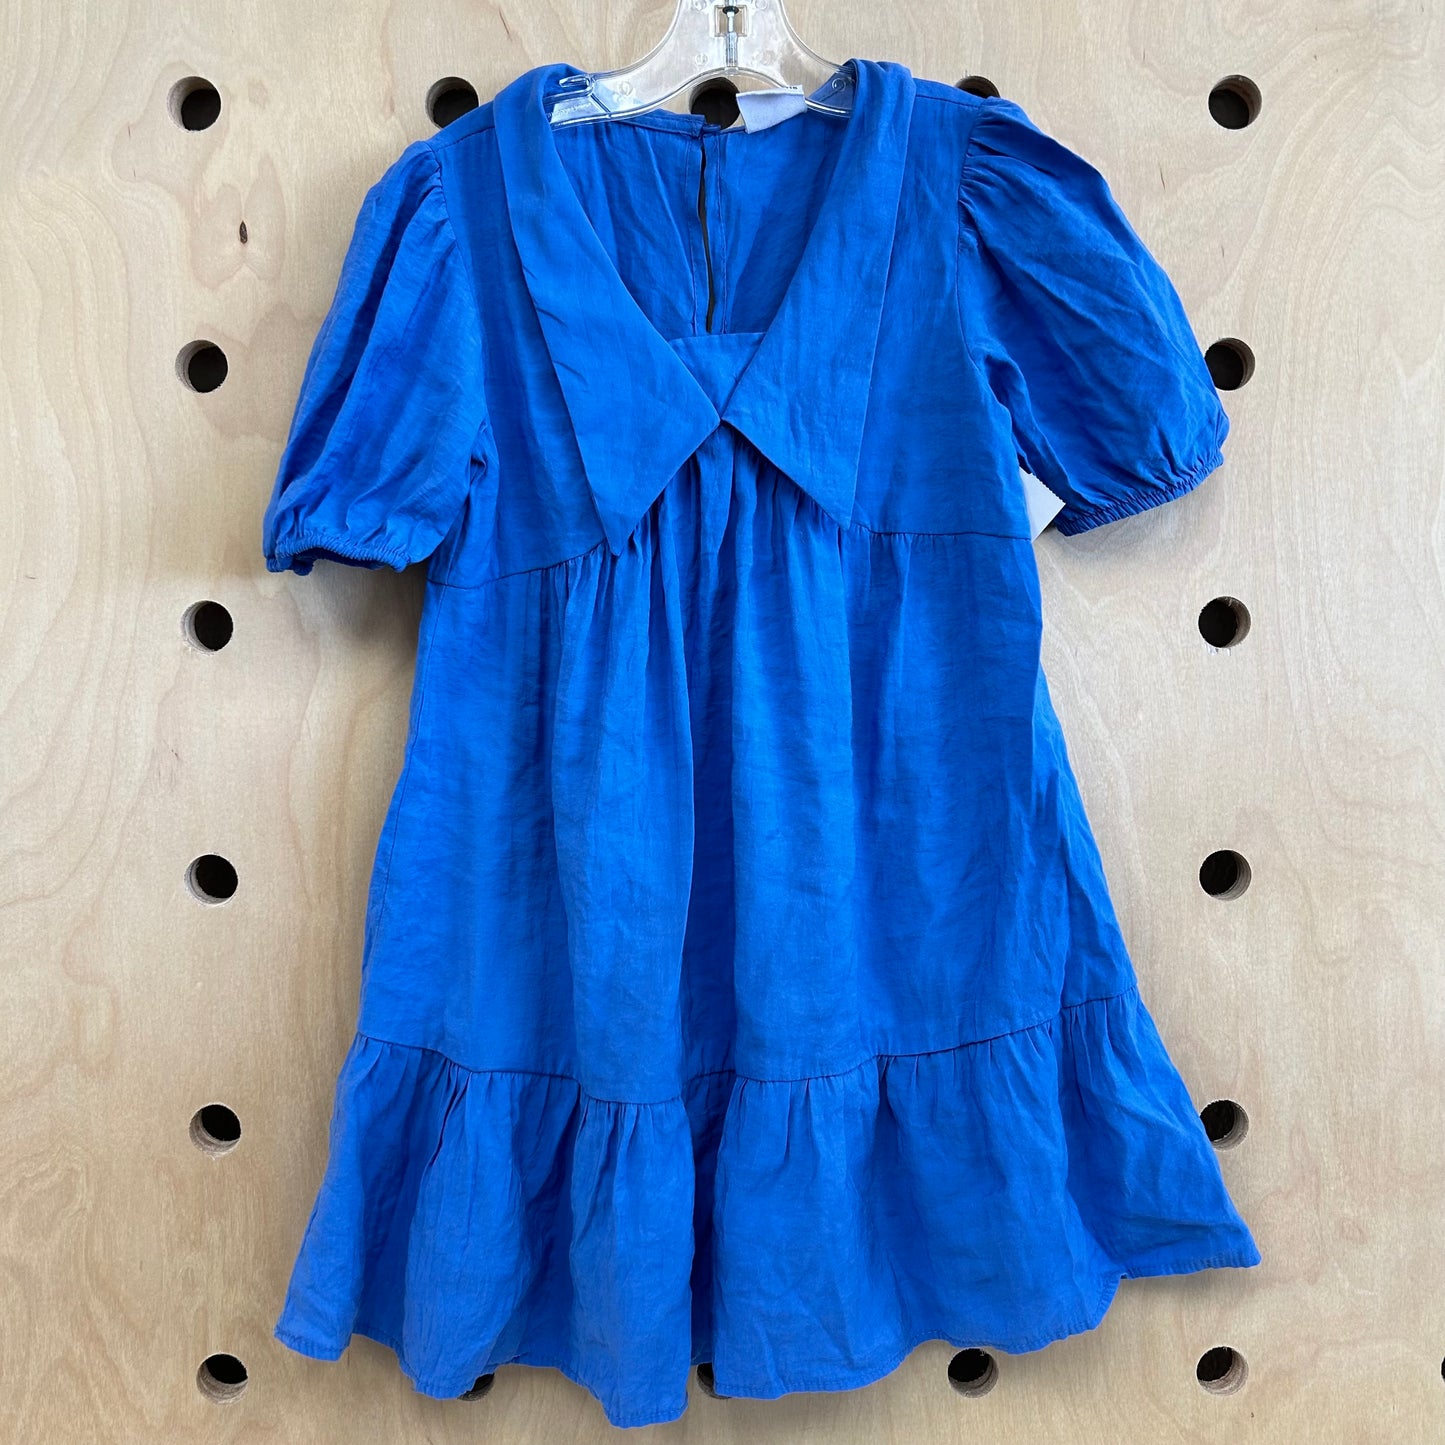 Blue Collared Dress